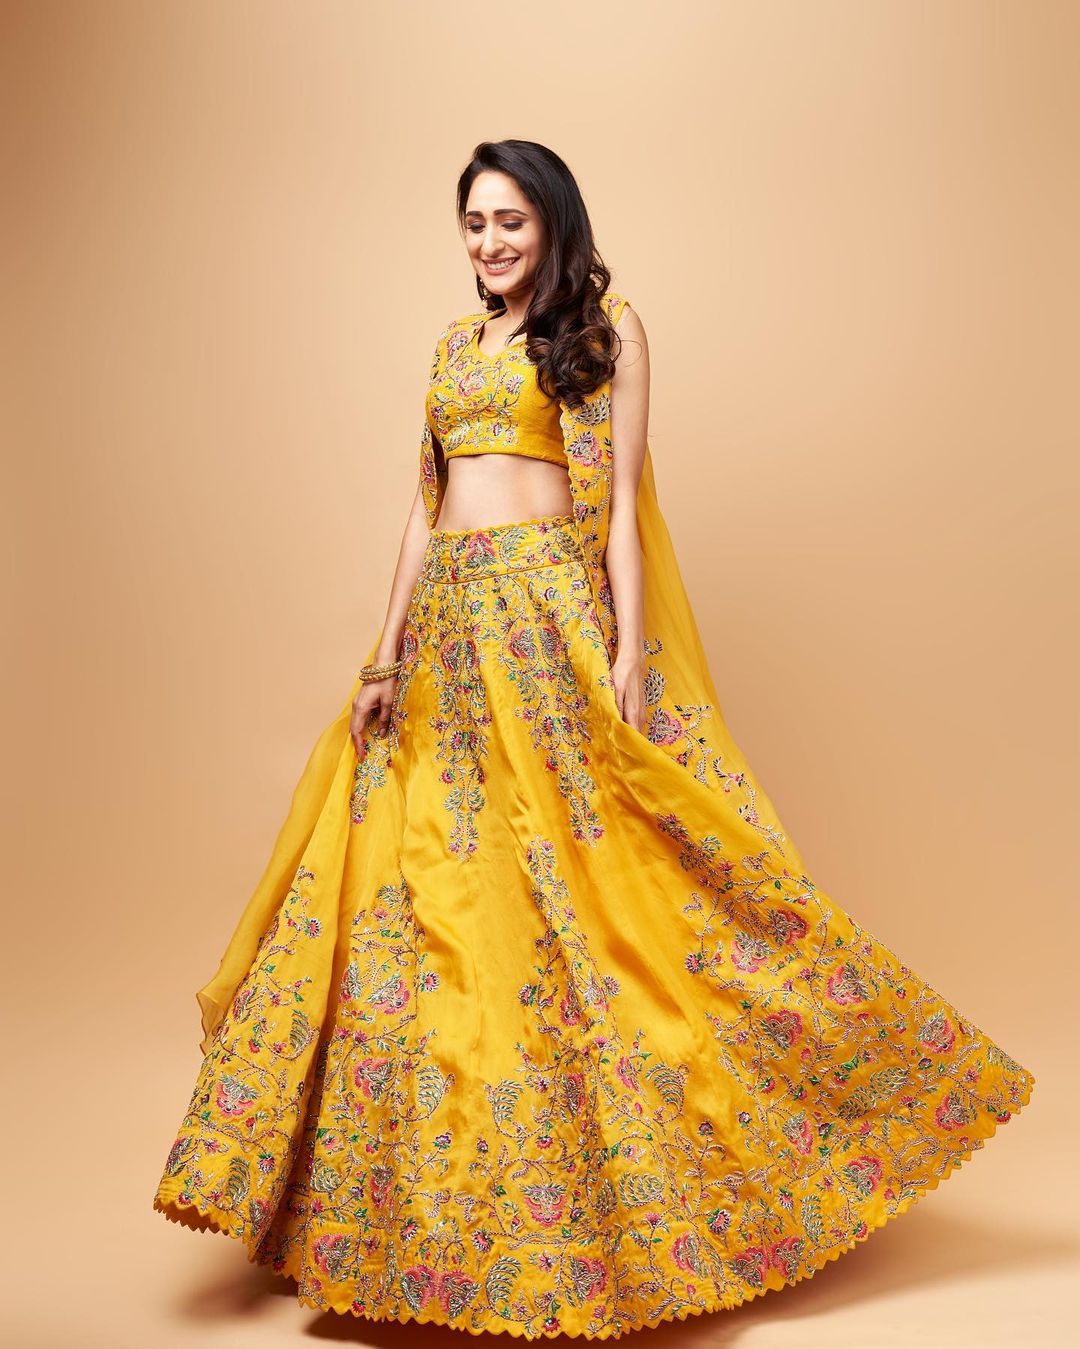 Pragya Jaiswal looks graceful in the yellow lehenga